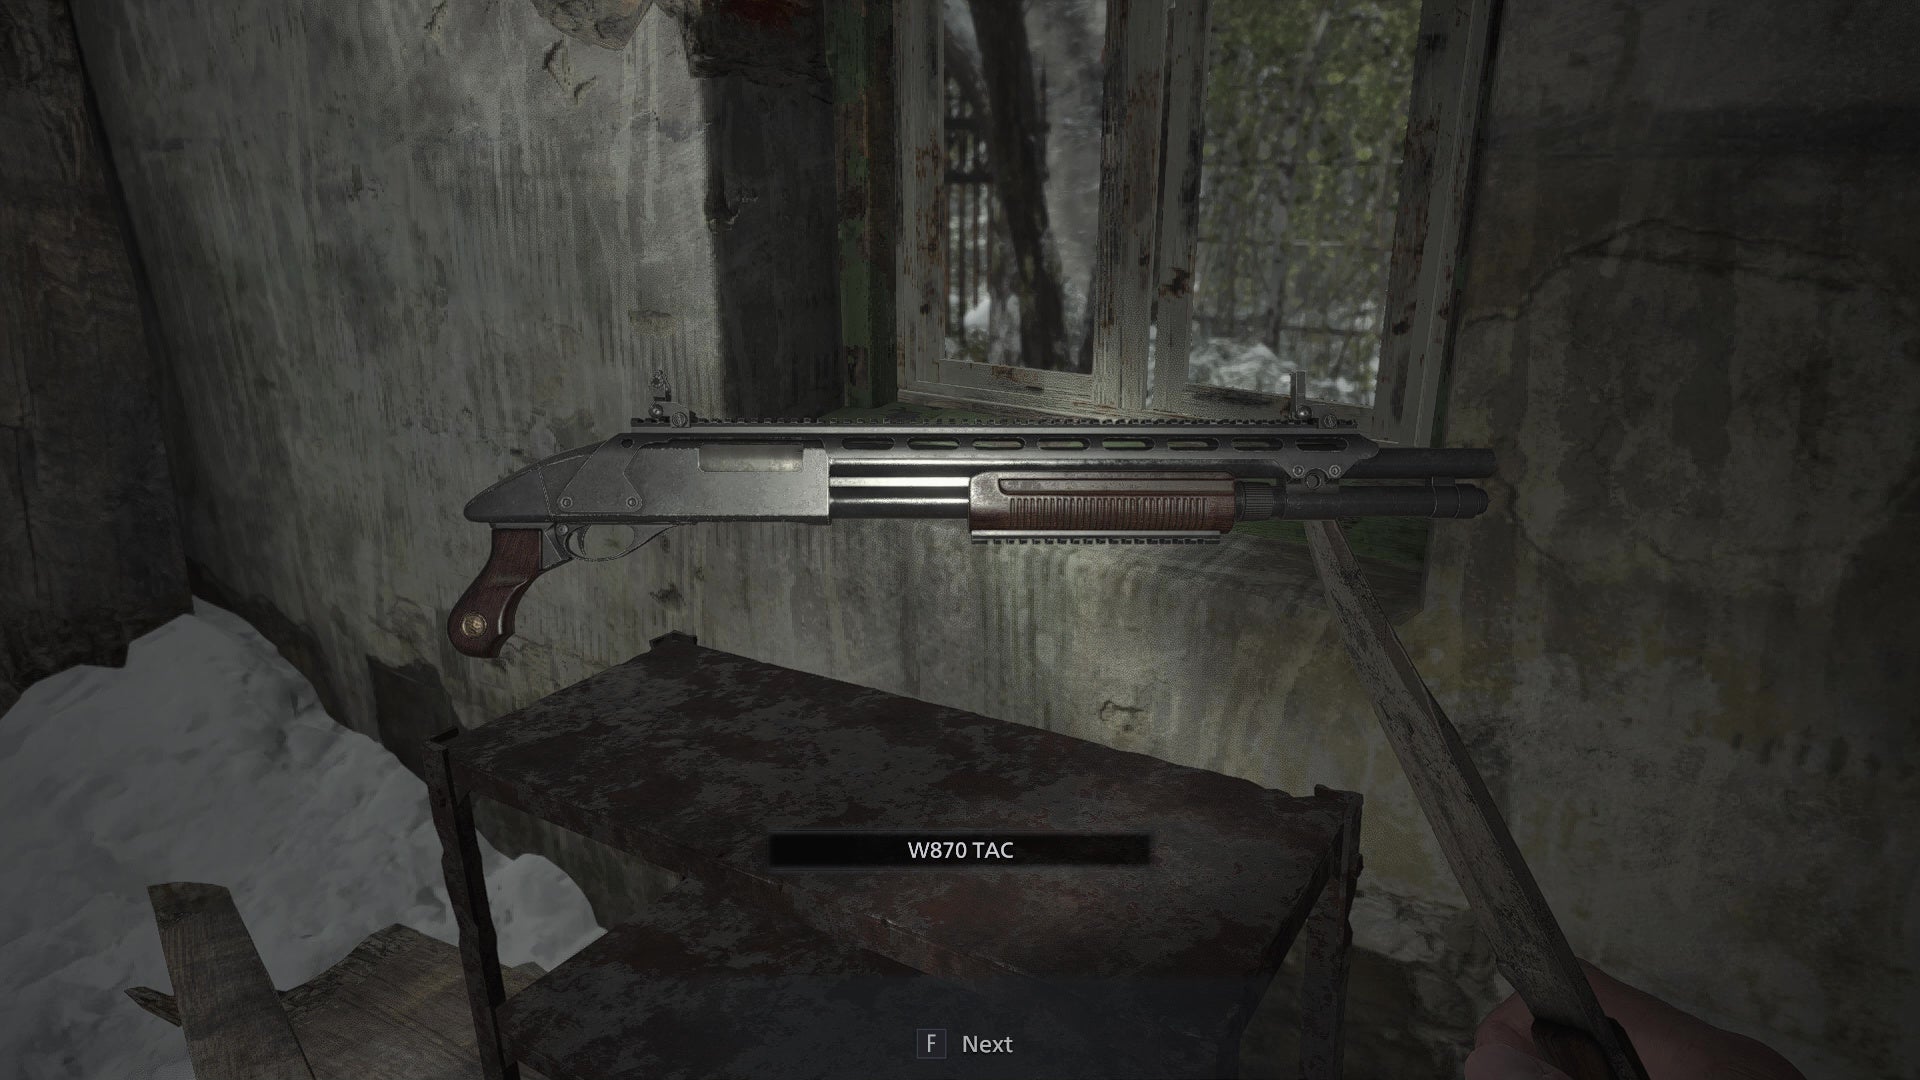 An image of the WTAC 870 shotgun in Resident Evil Village.